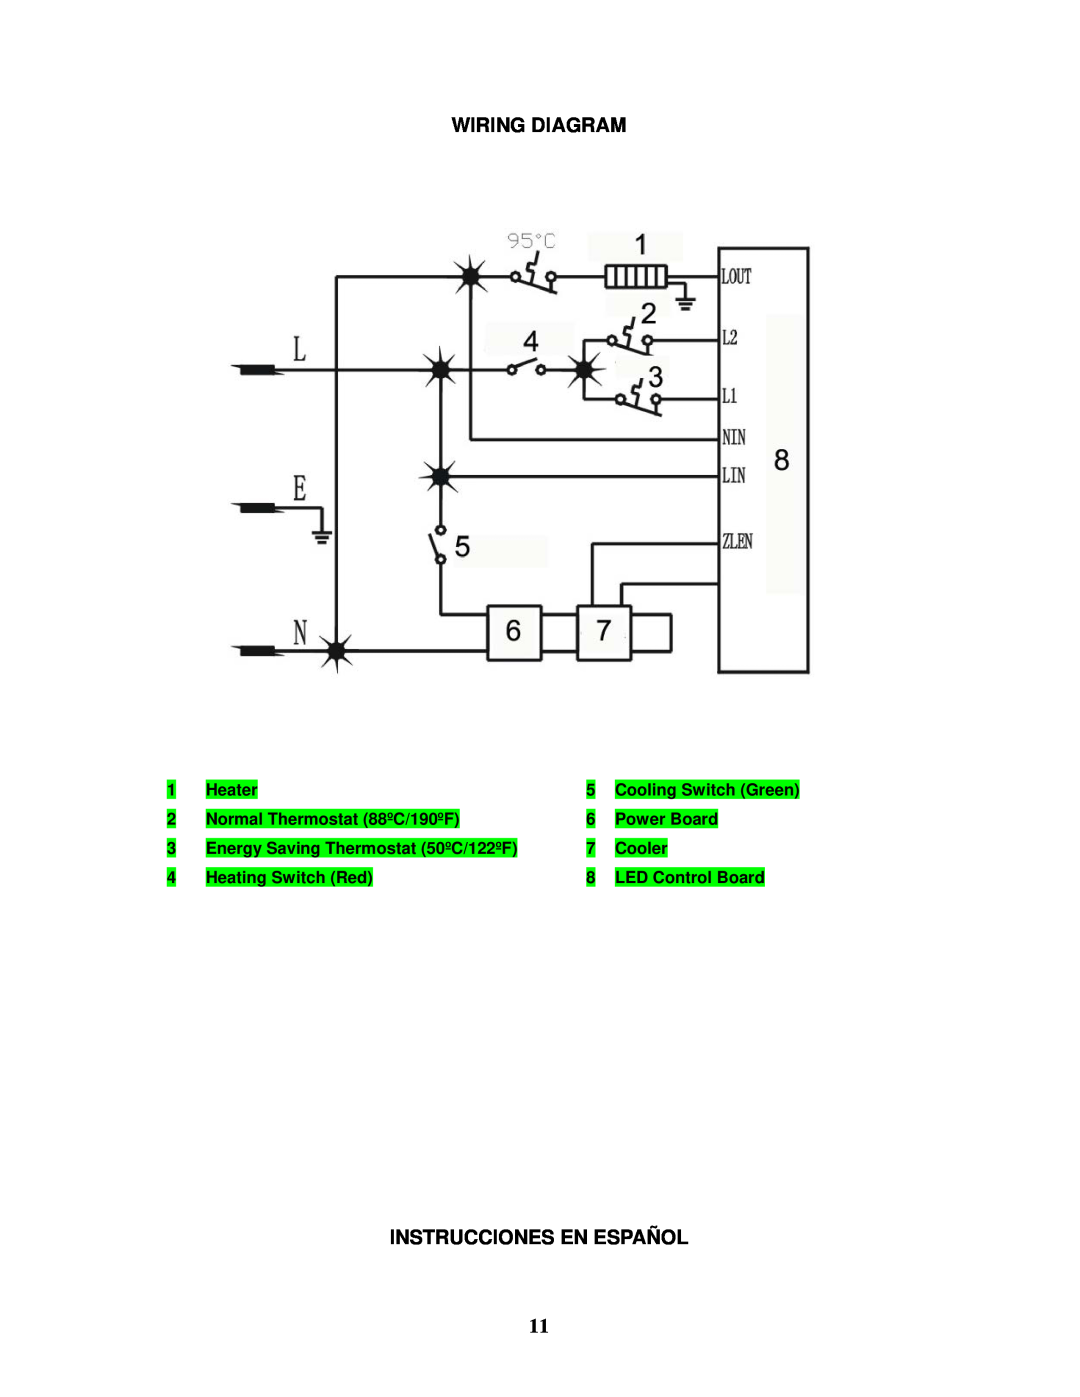 Avanti WD31EC Heater, Cooling Switch Green, Normal Thermostat 88ºC/190ºF, Power Board, Energy Saving Thermostat 50ºC/122ºF 